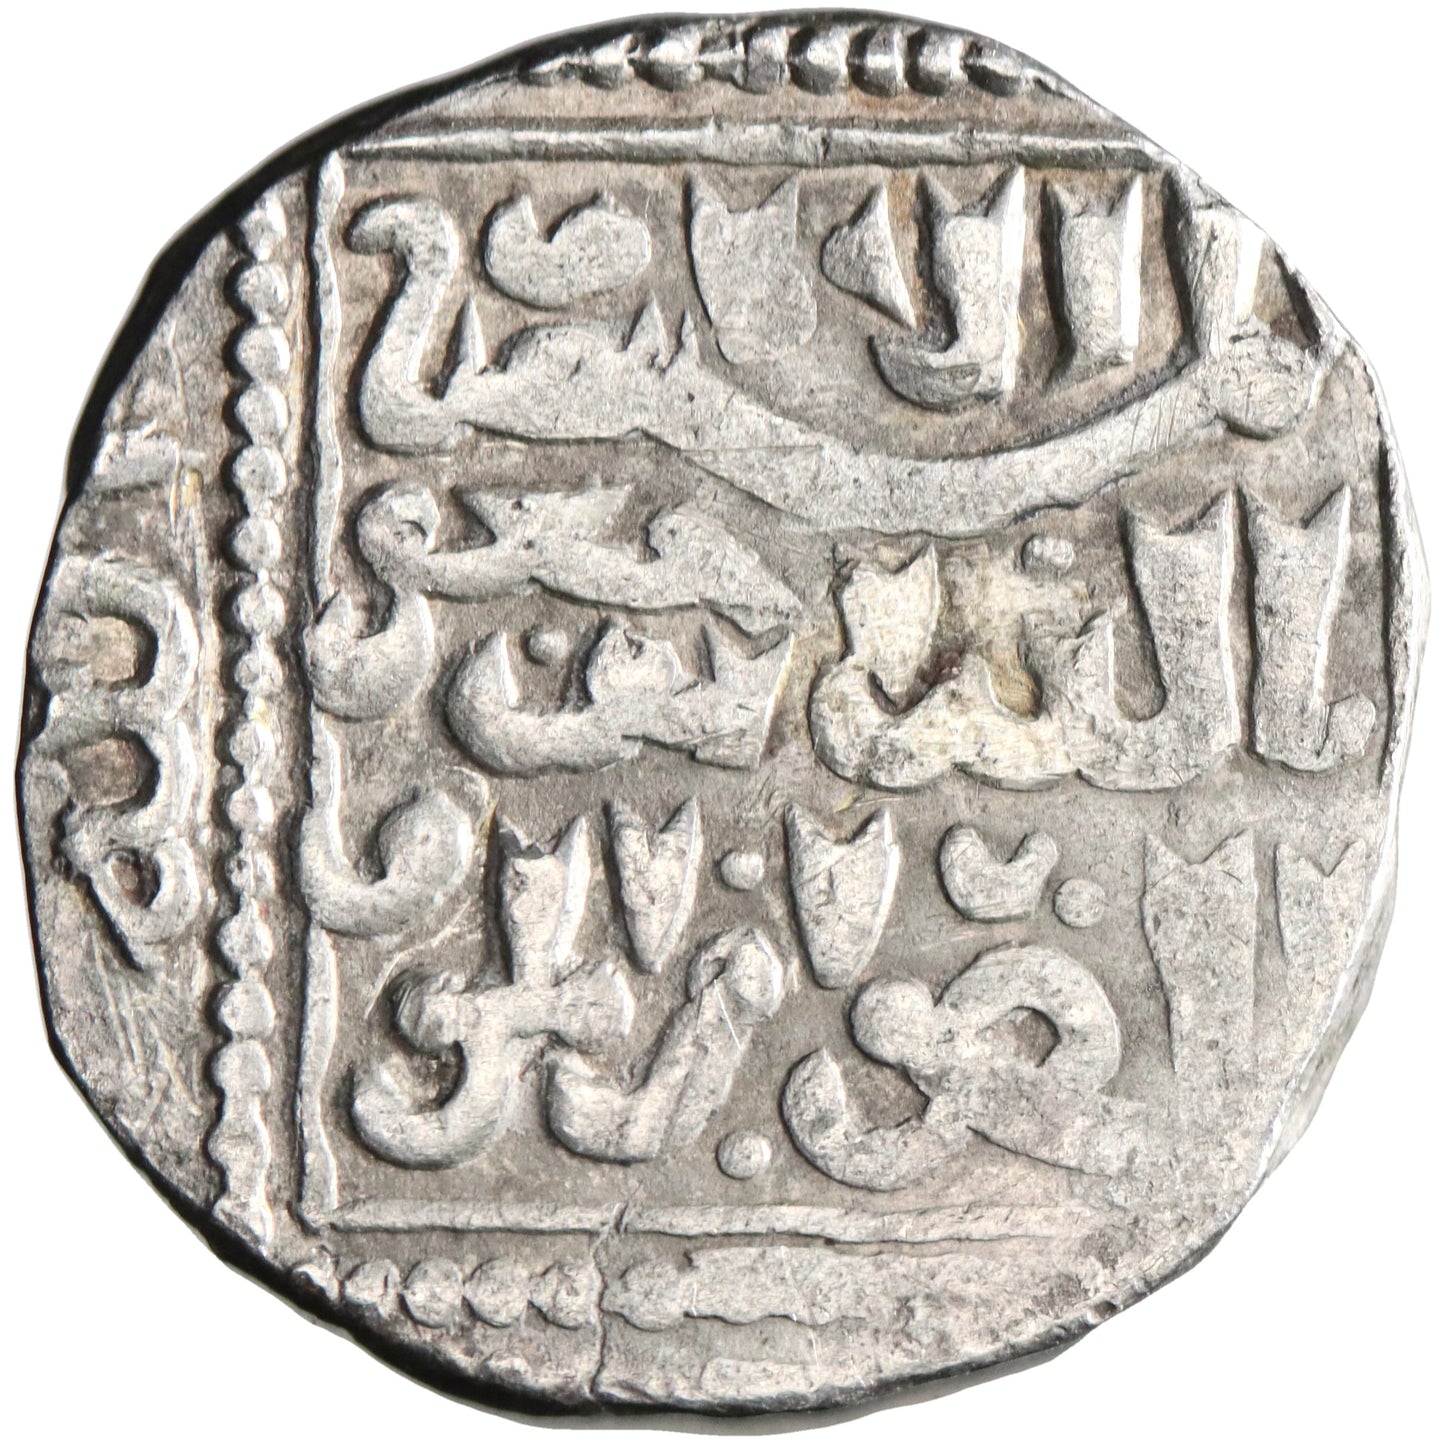 Crusader Kingdoms, silver dirham, 1230s-1240s CE, imitation of Ayyubid dirham from the reign of al-Salih Isma'il I, citing al-Mustansir